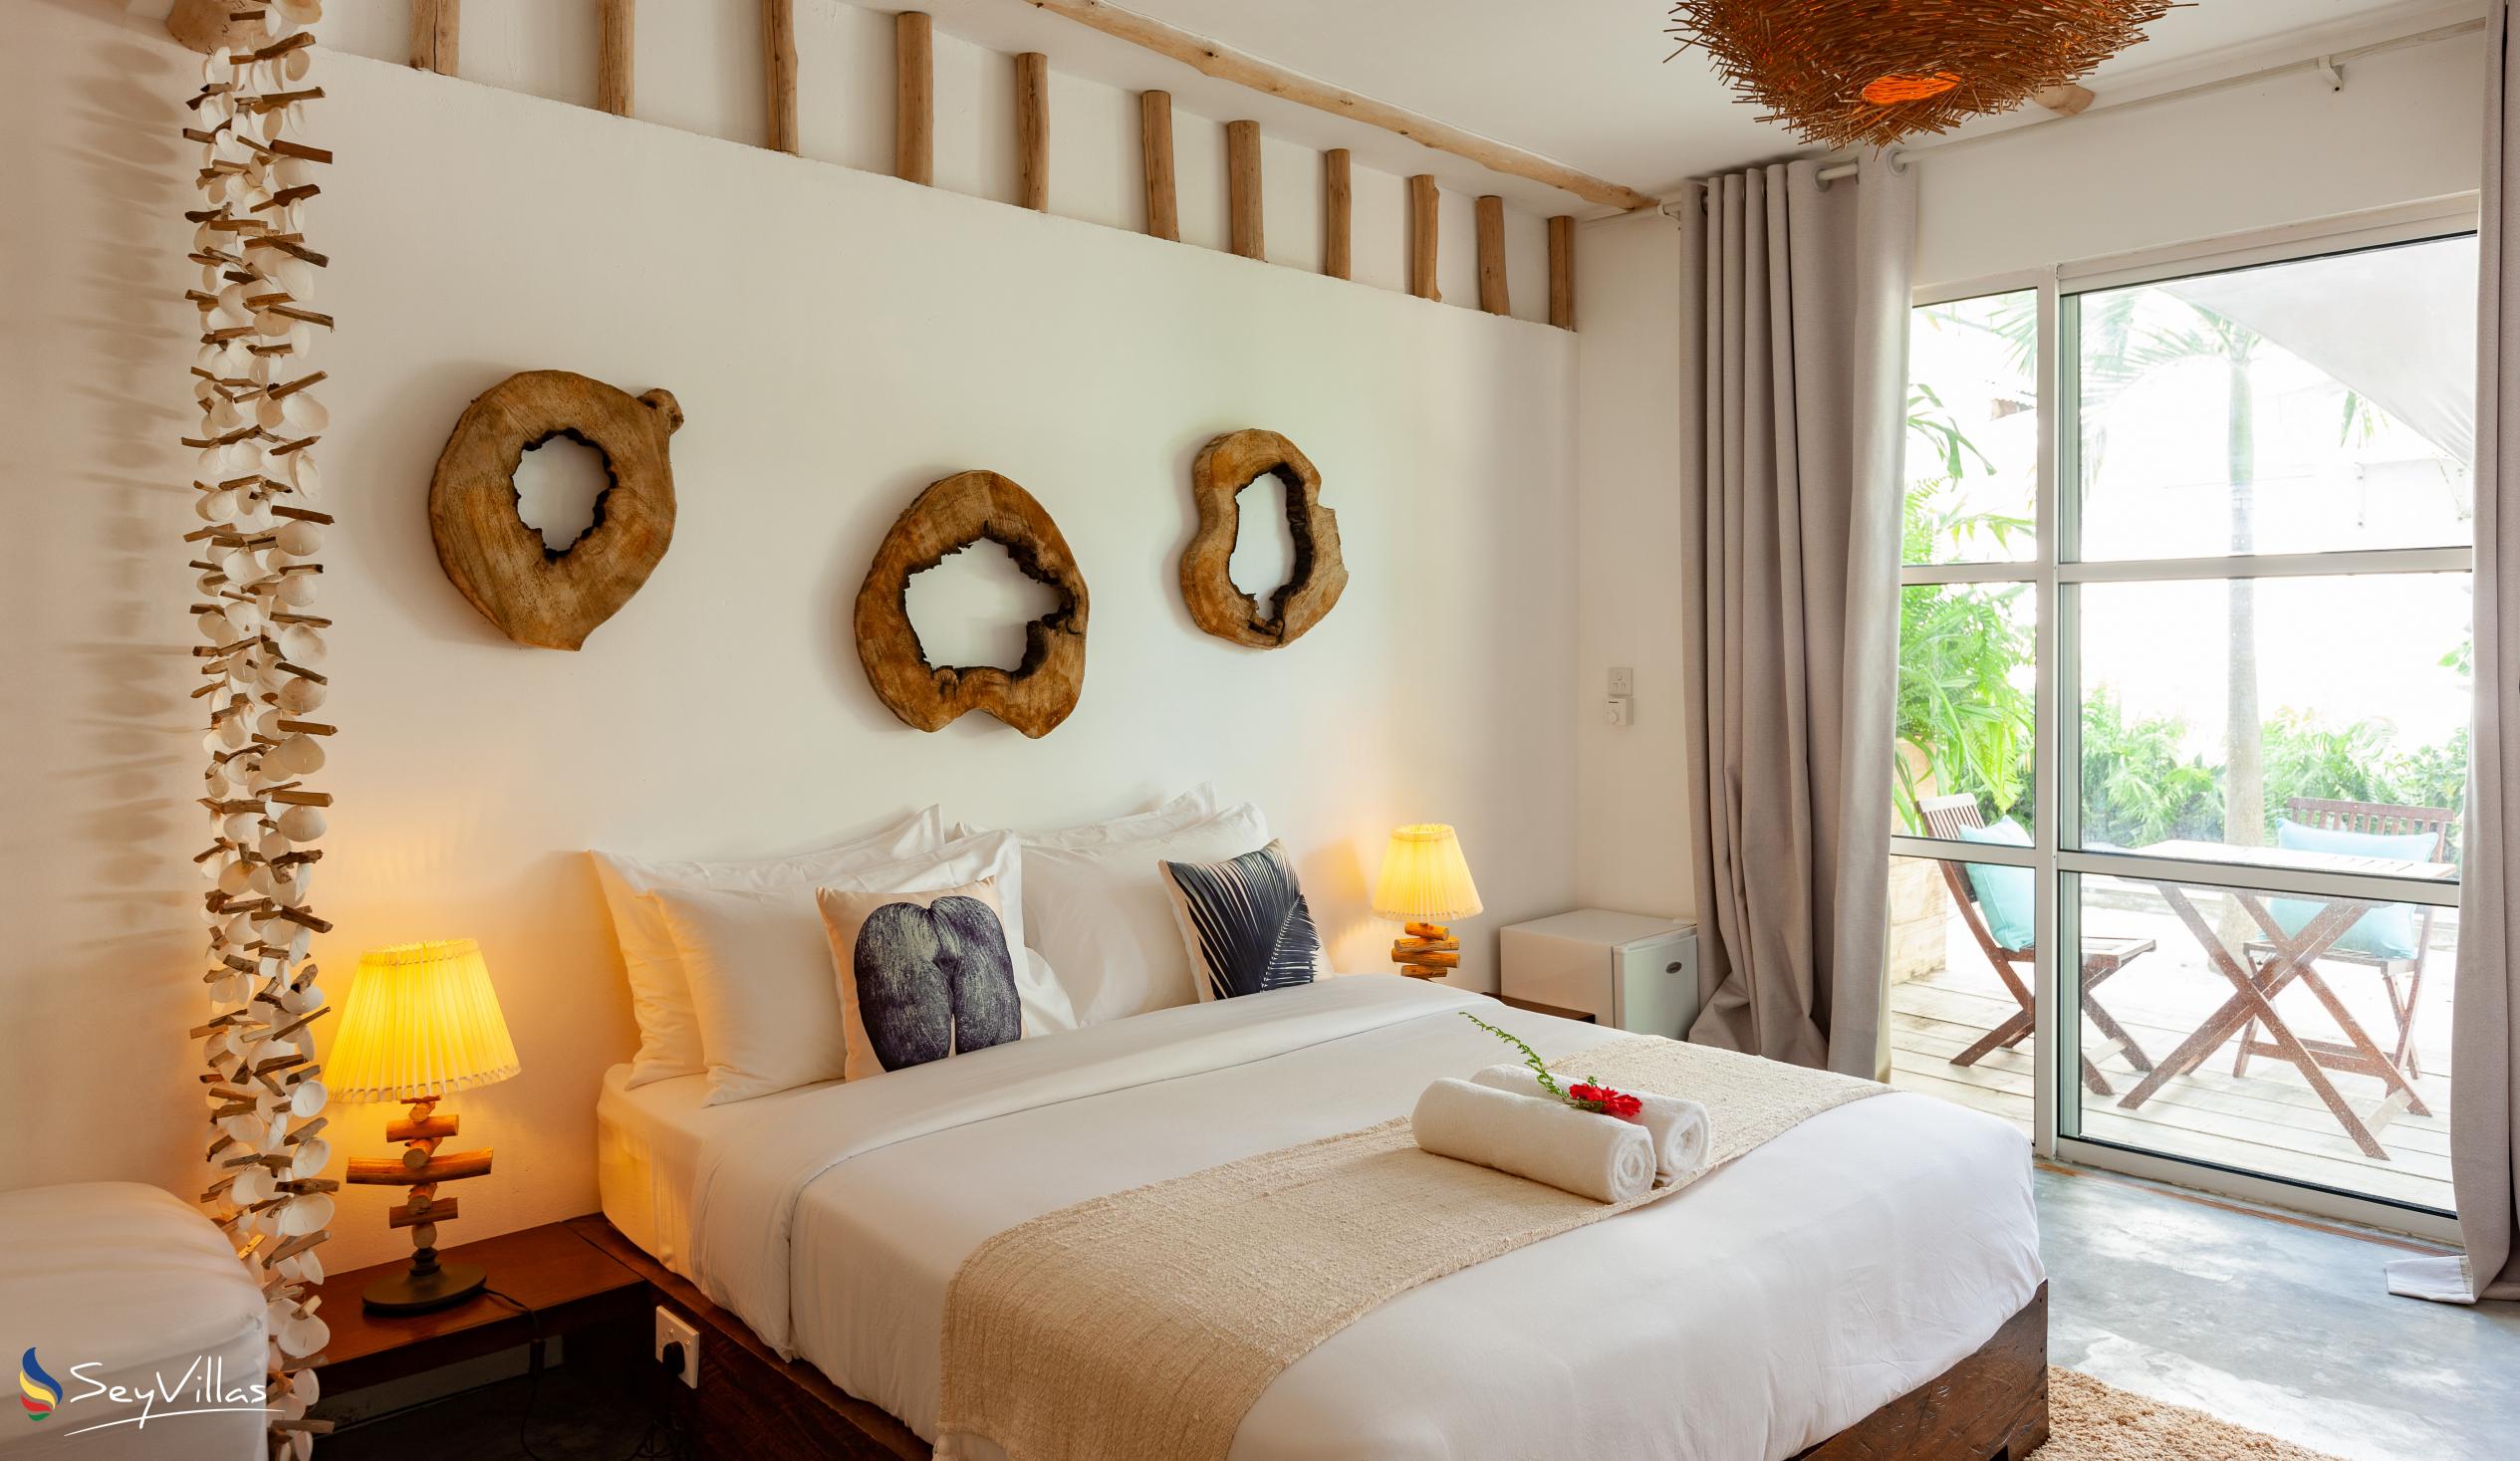 Photo 121: Bliss Hotel Praslin - Beach House - Beach Garden Room - Praslin (Seychelles)